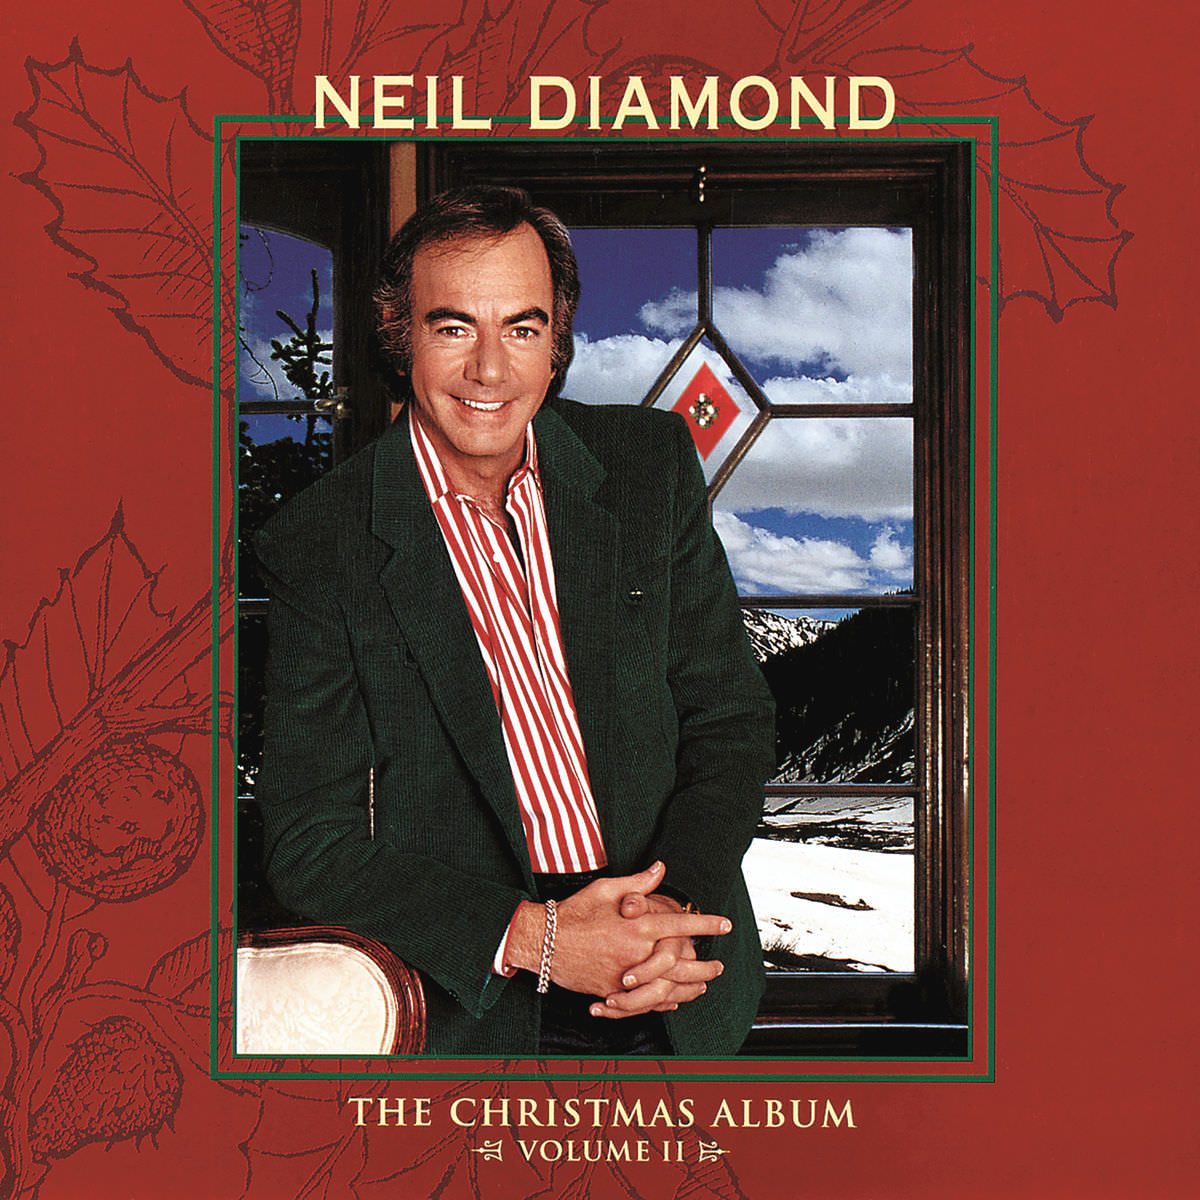 Neil Diamond - The Christmas Album, Vol. II (1994/2016) [FLAC 24bit/192kHz]